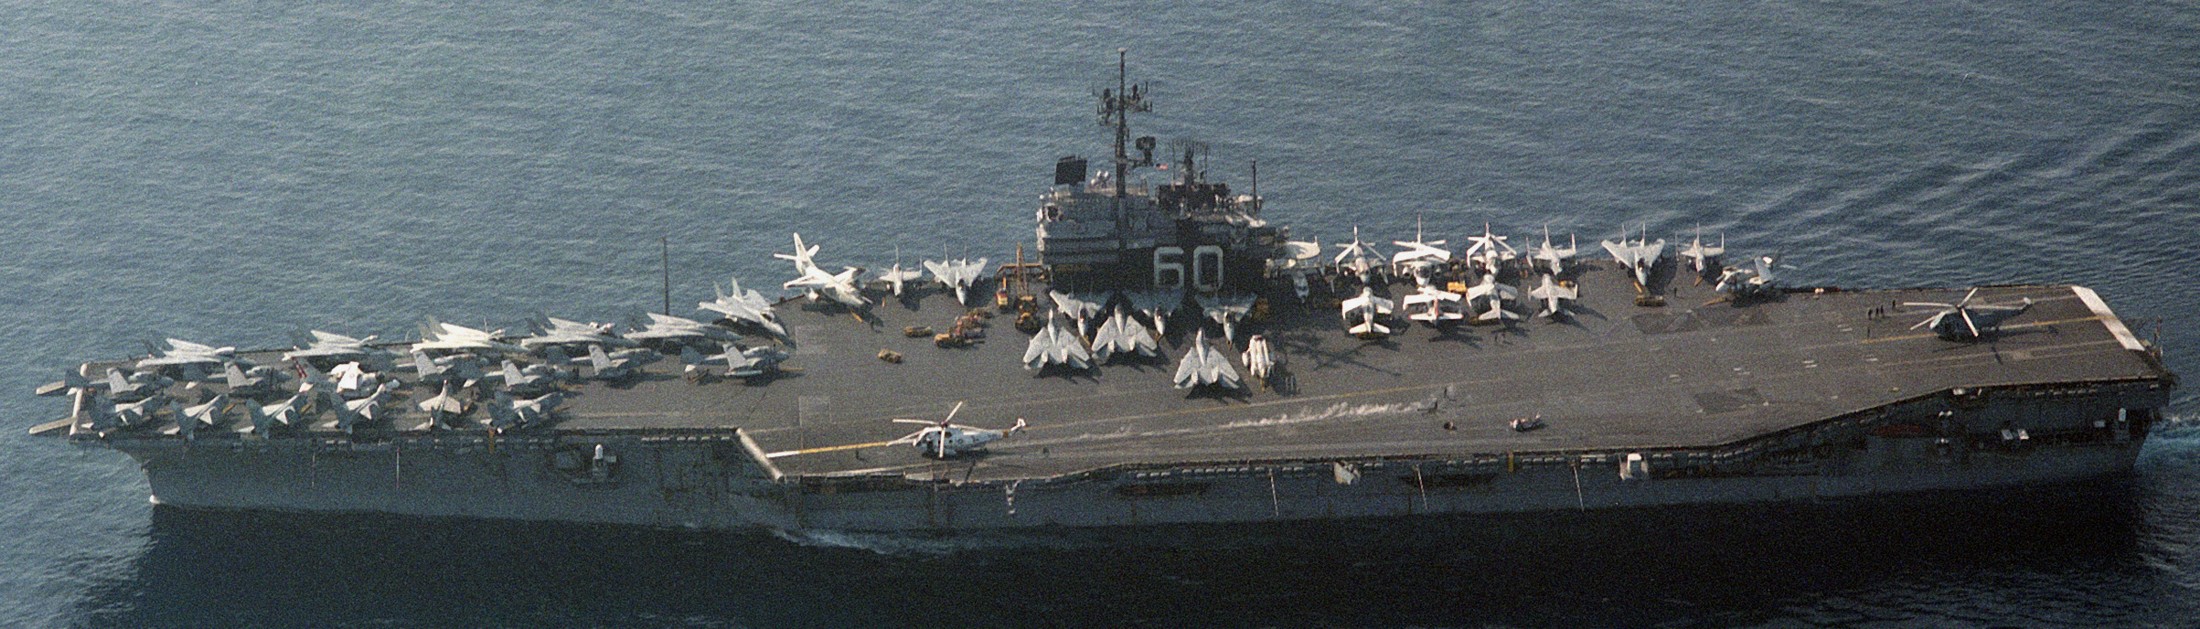 cv-60 uss saratoga forrestal class aircraft carrier air wing cvw-17 us navy 88